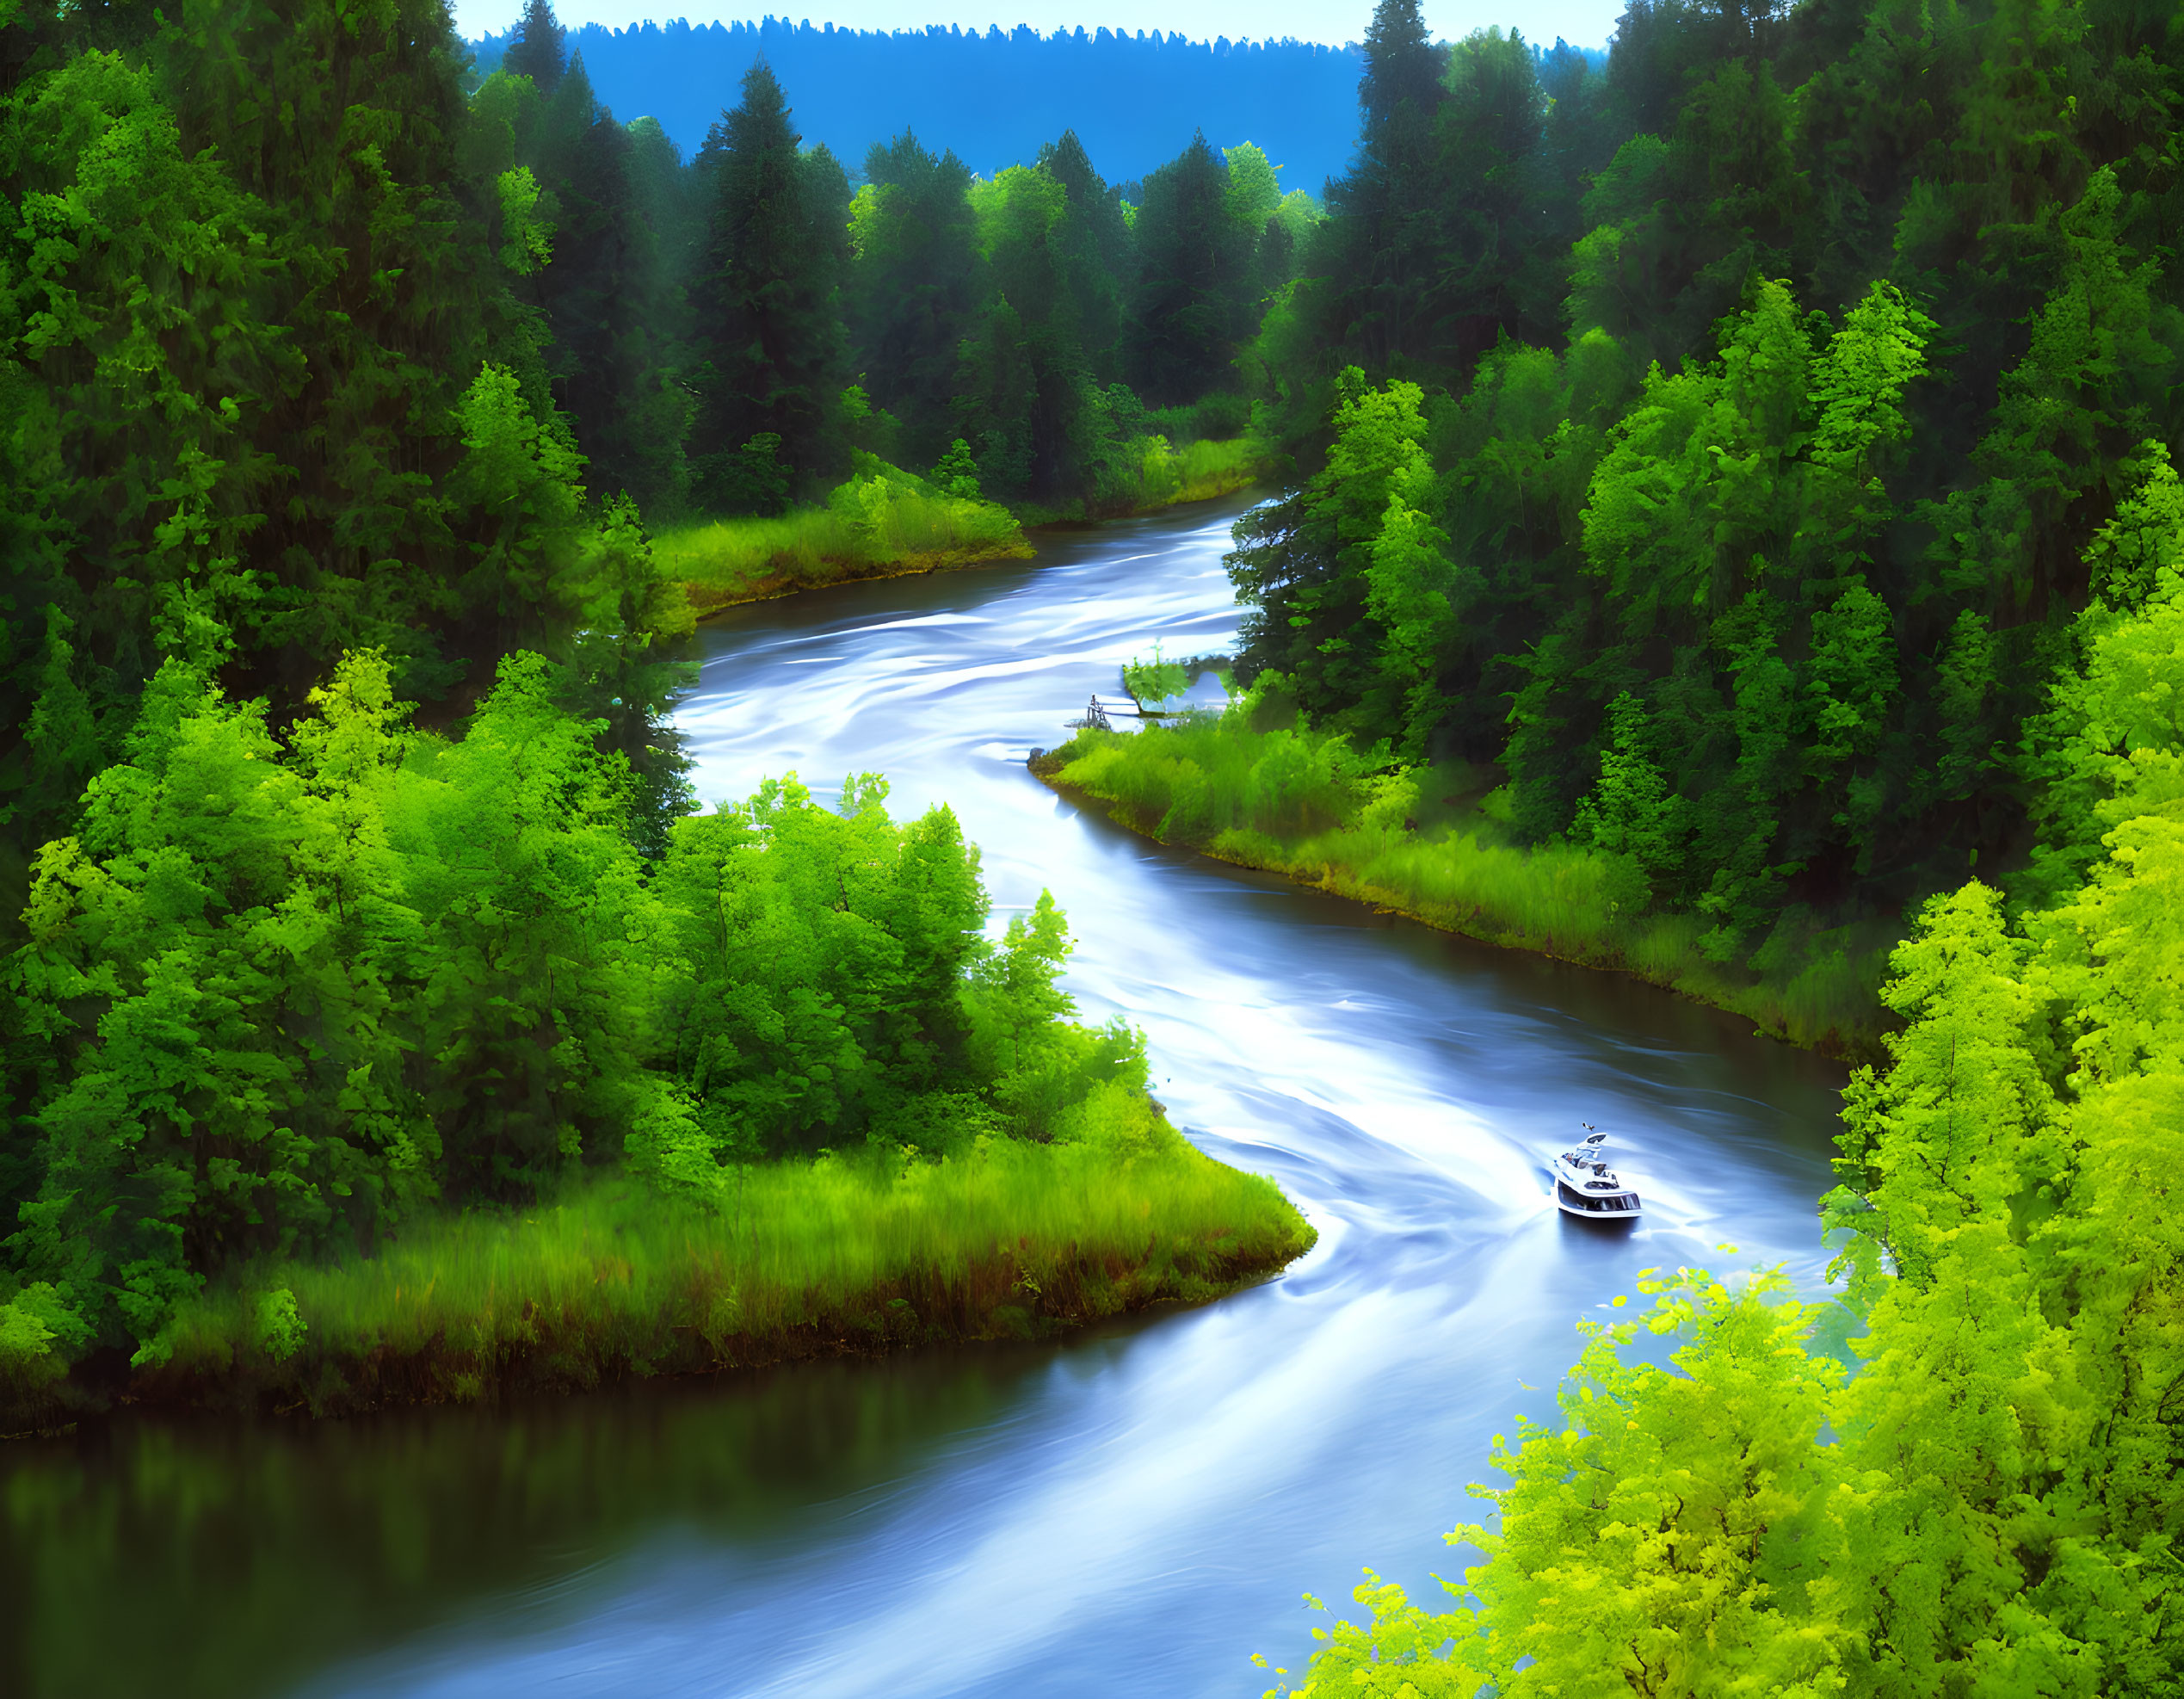 Boat navigating winding river in lush green forest landscape